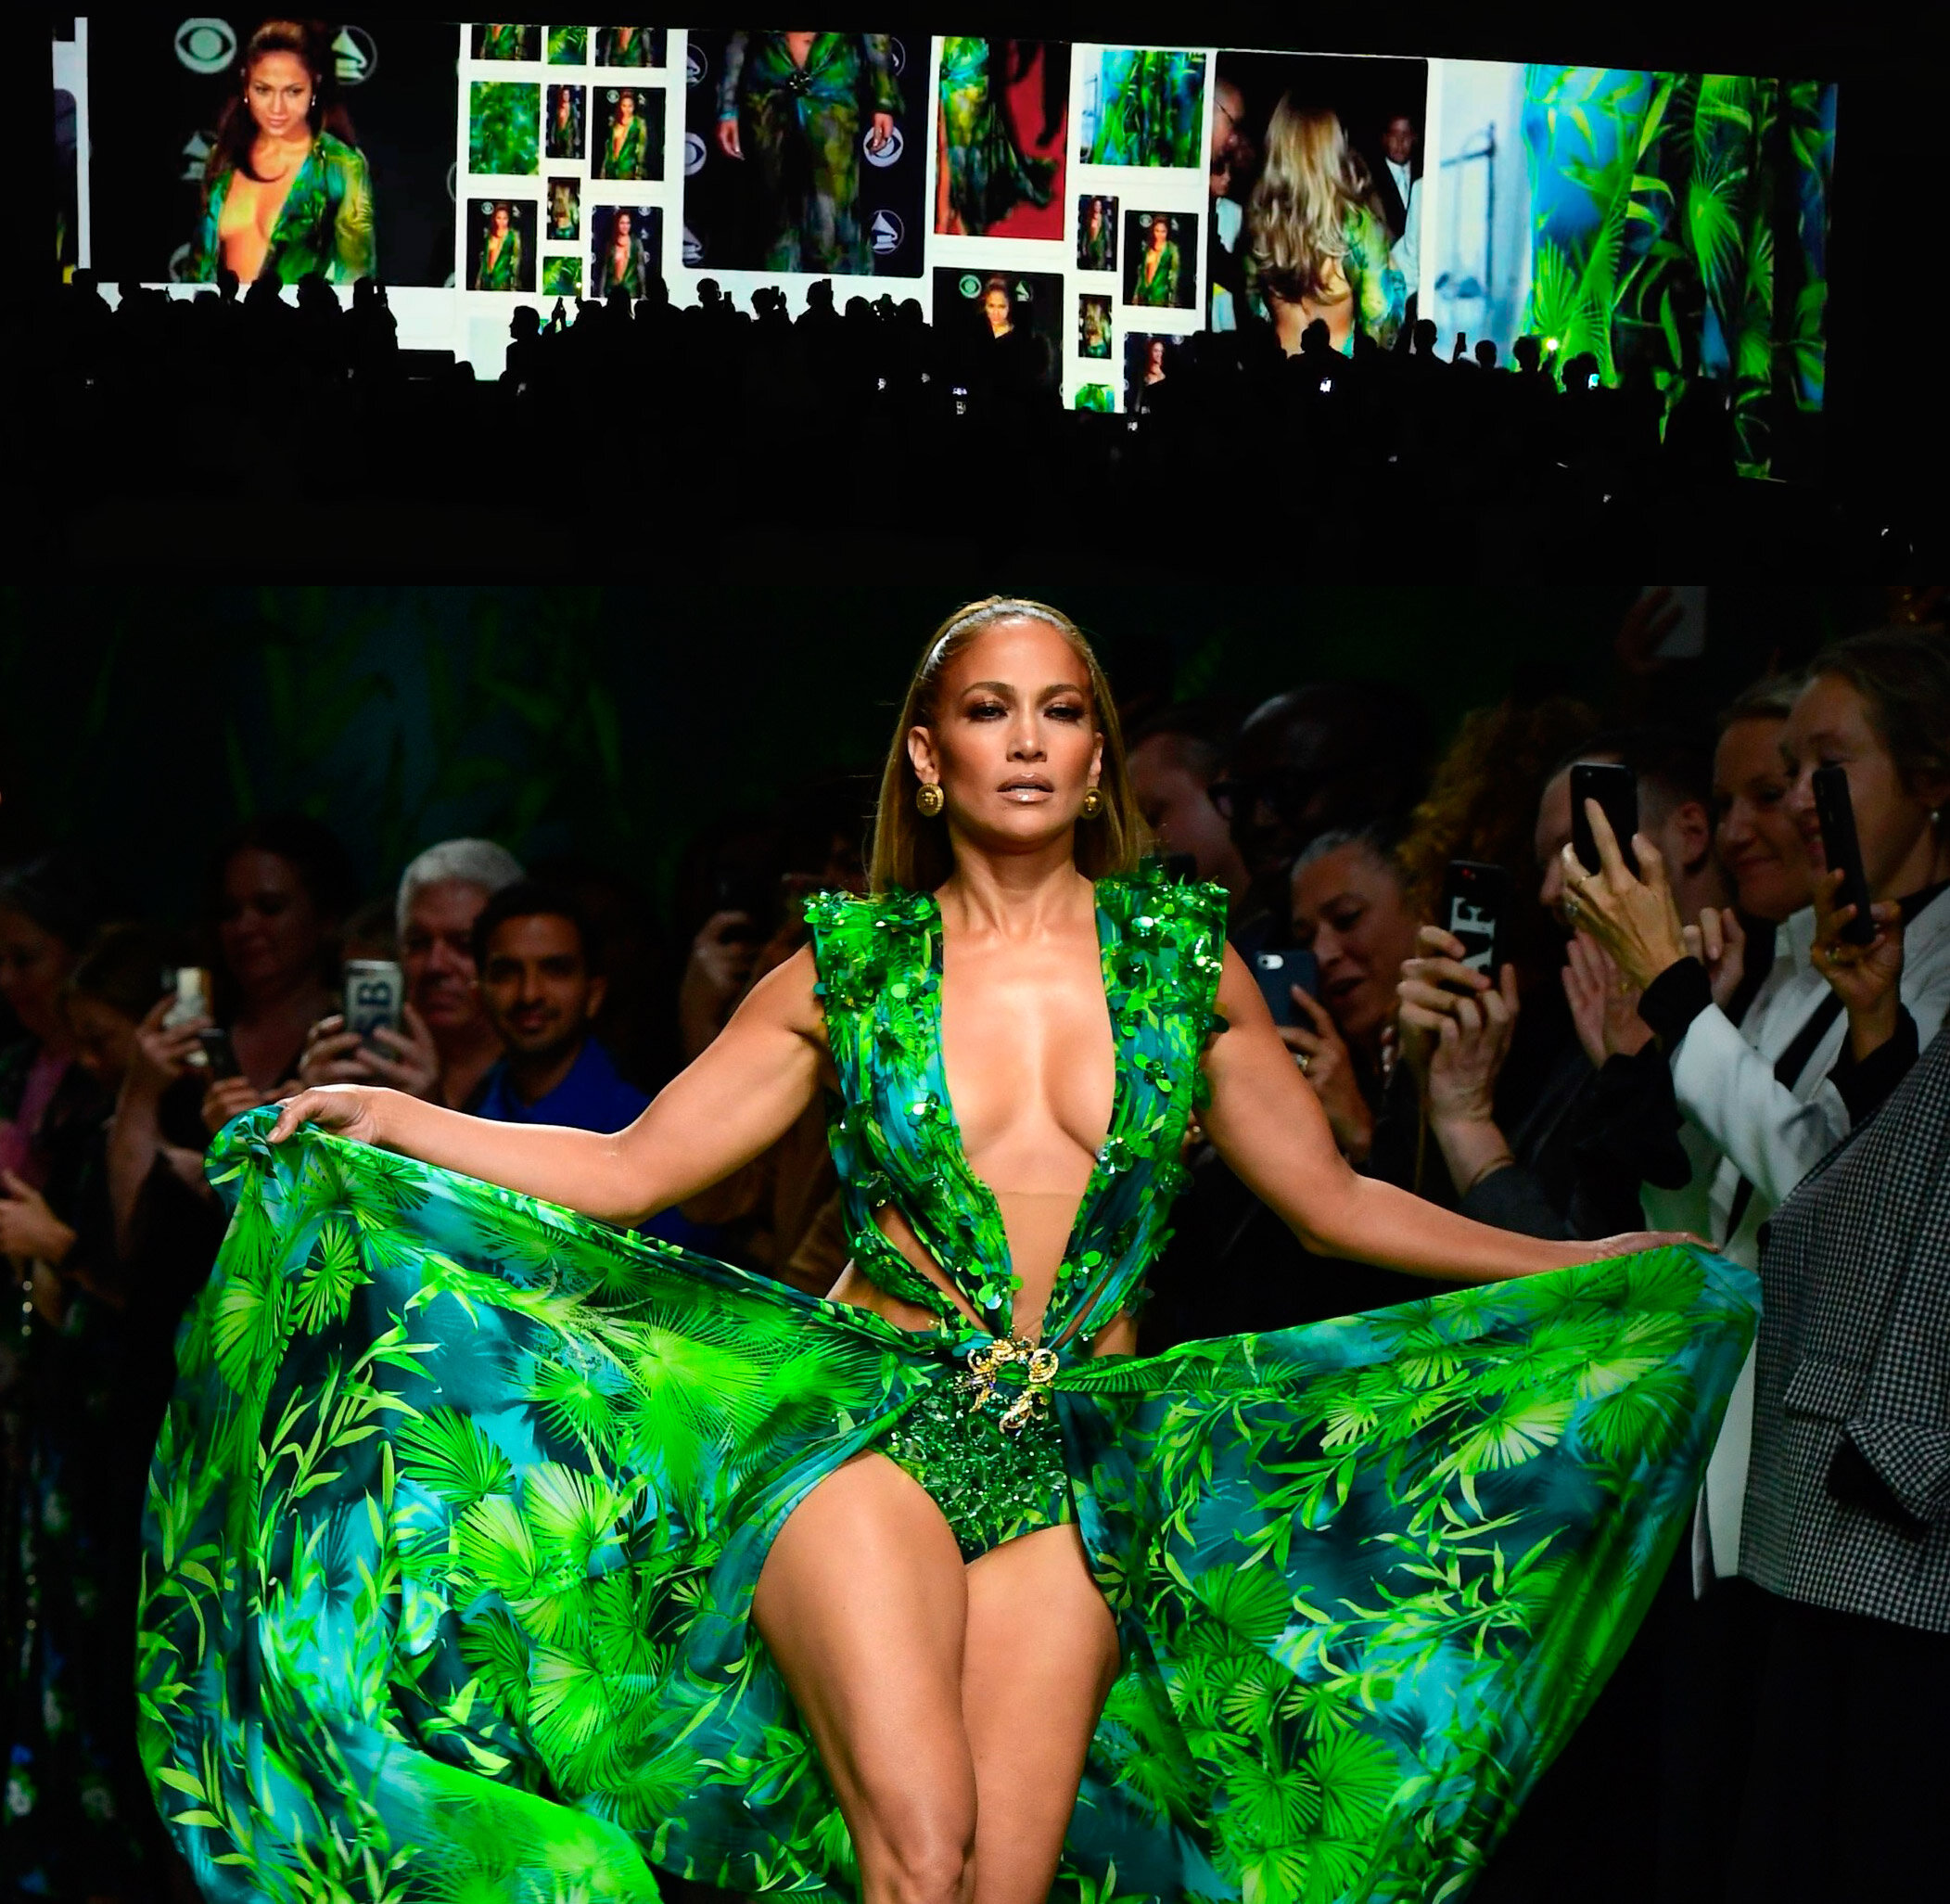 Versace Spring/Summer 2020 Show Featuring Jennifer Lopez